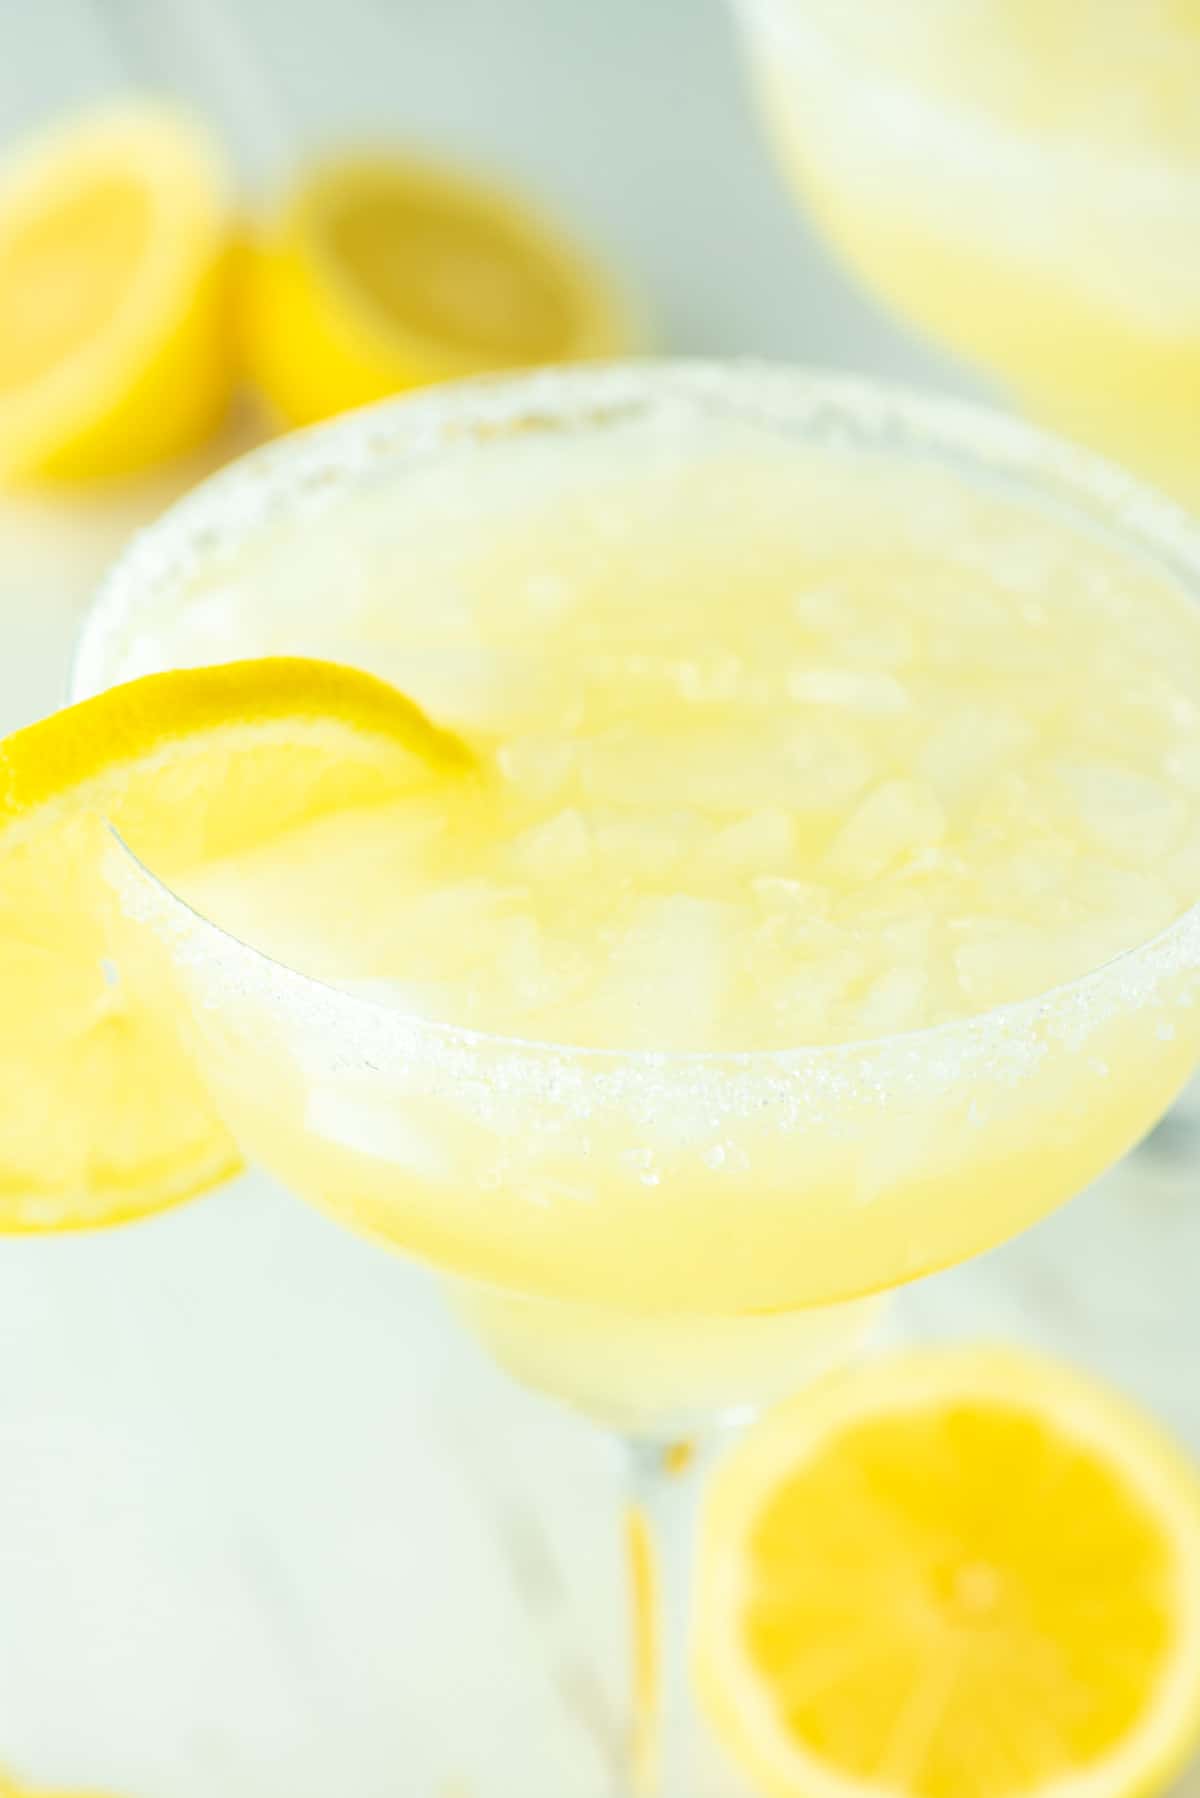 margarita with lemon in glass